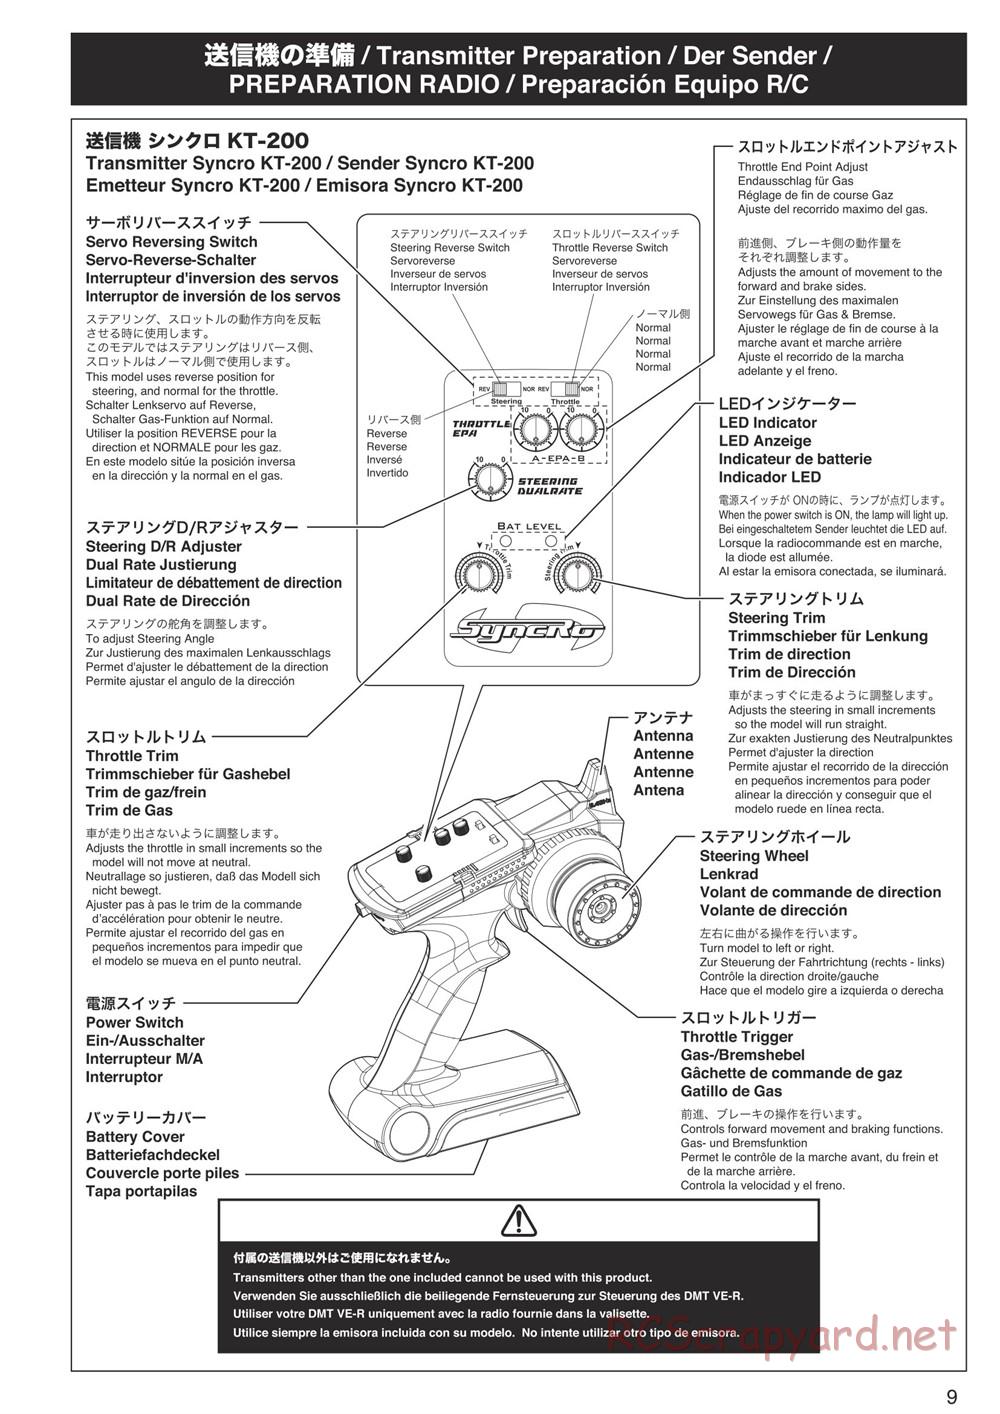 Kyosho - DMT VE-R - Manual - Page 9